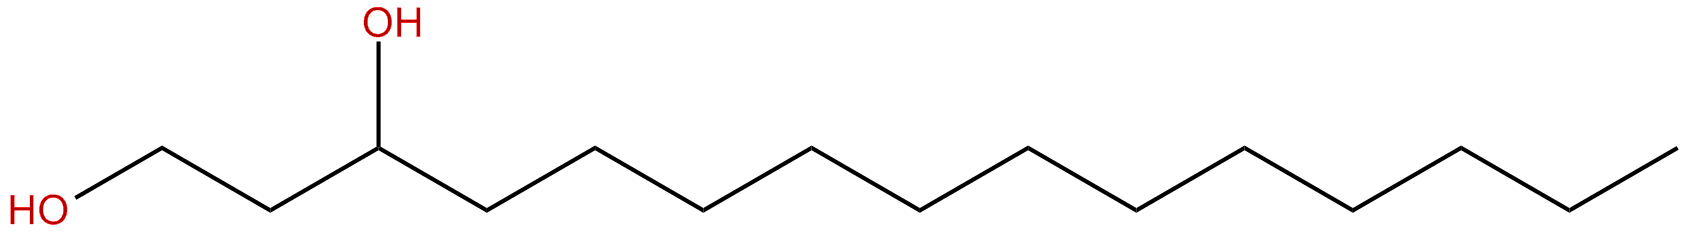 Image of 1,3-pentadecanediol